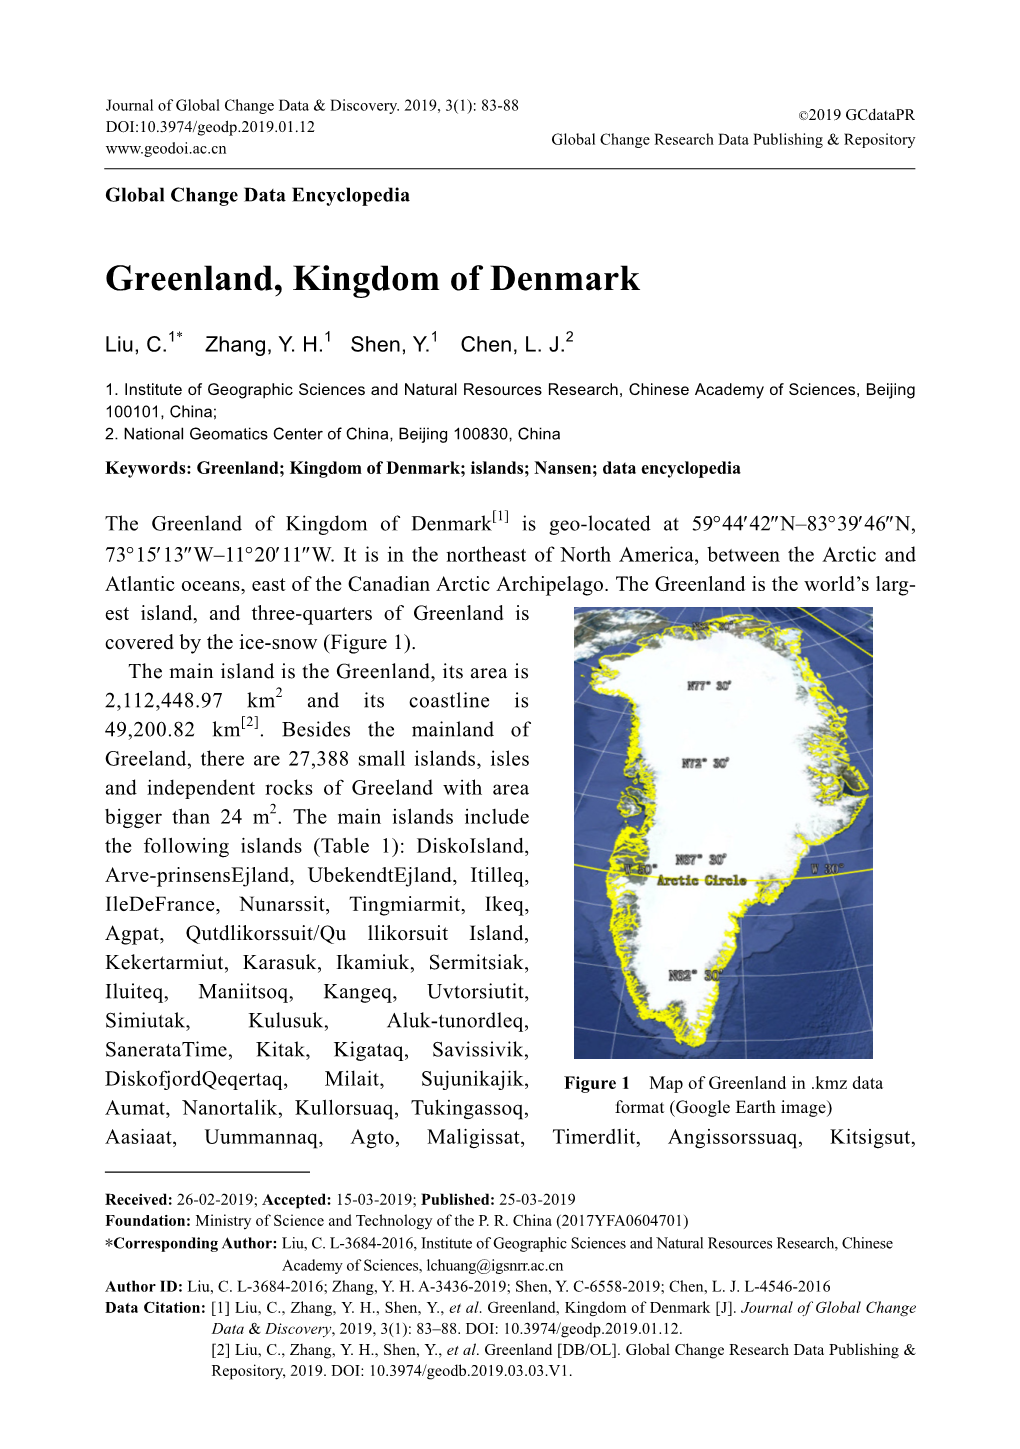 Greenland, Kingdom of Denmark